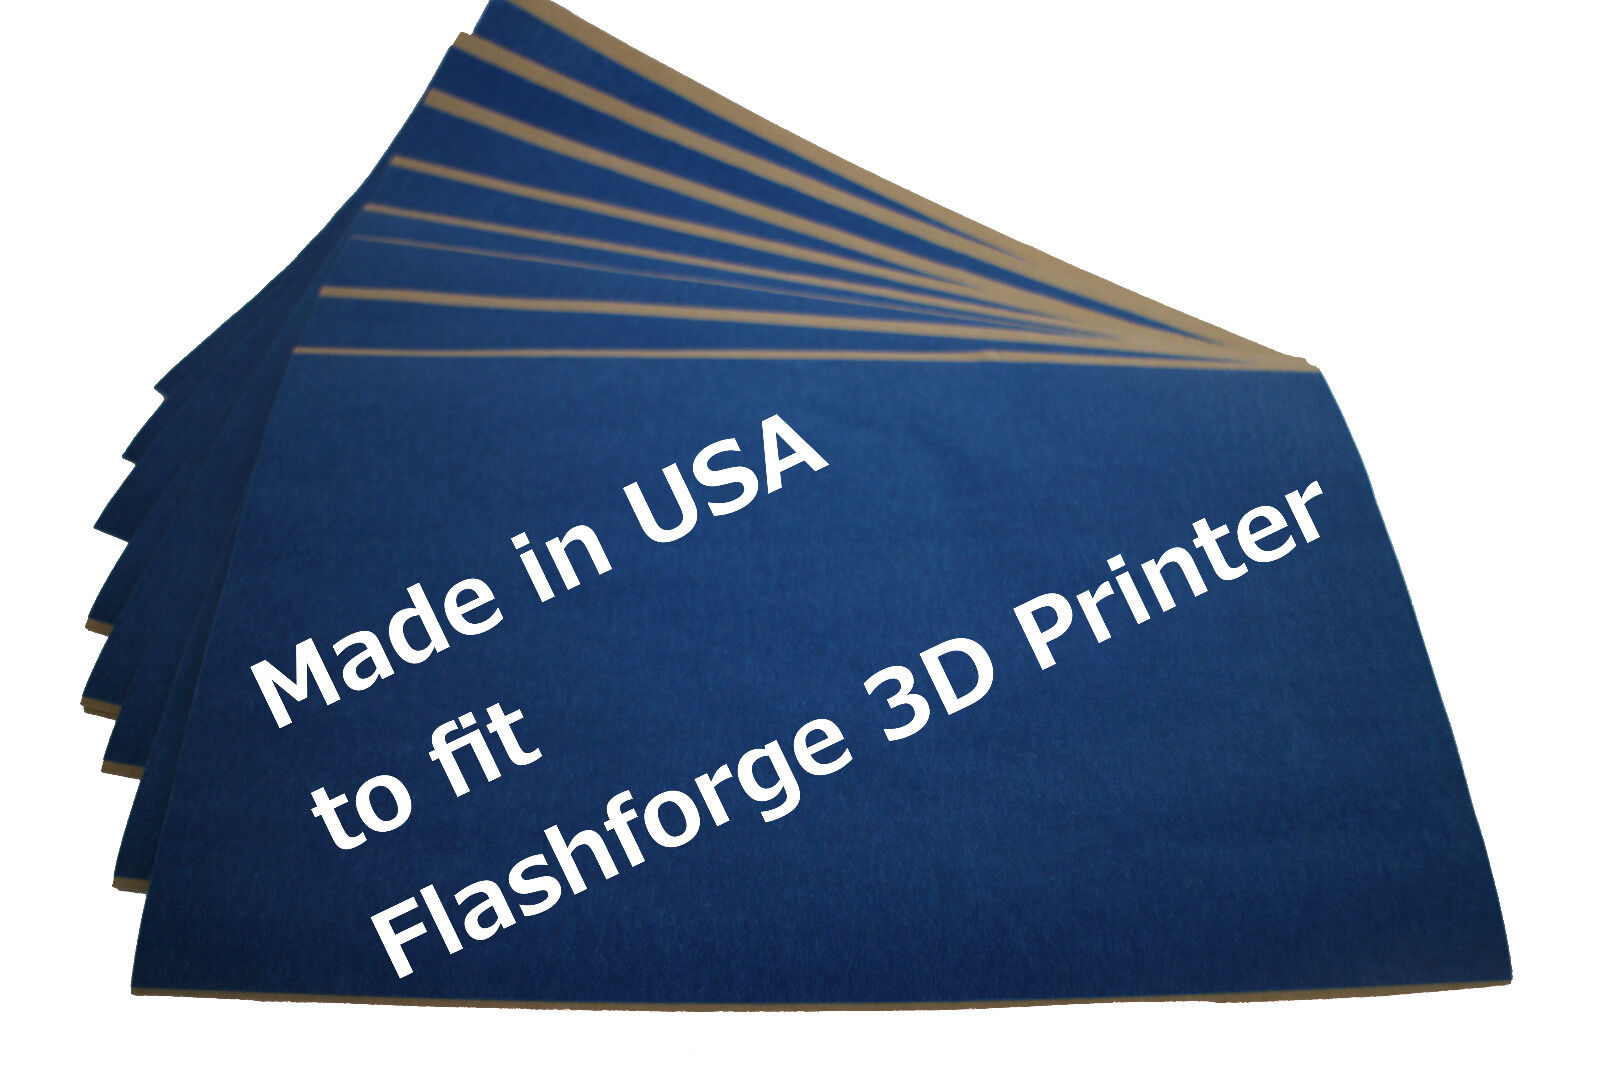 Blue Tape for Flashforge, CTC, Makerbot Build Platform (10 pack) Made in U.S.A.